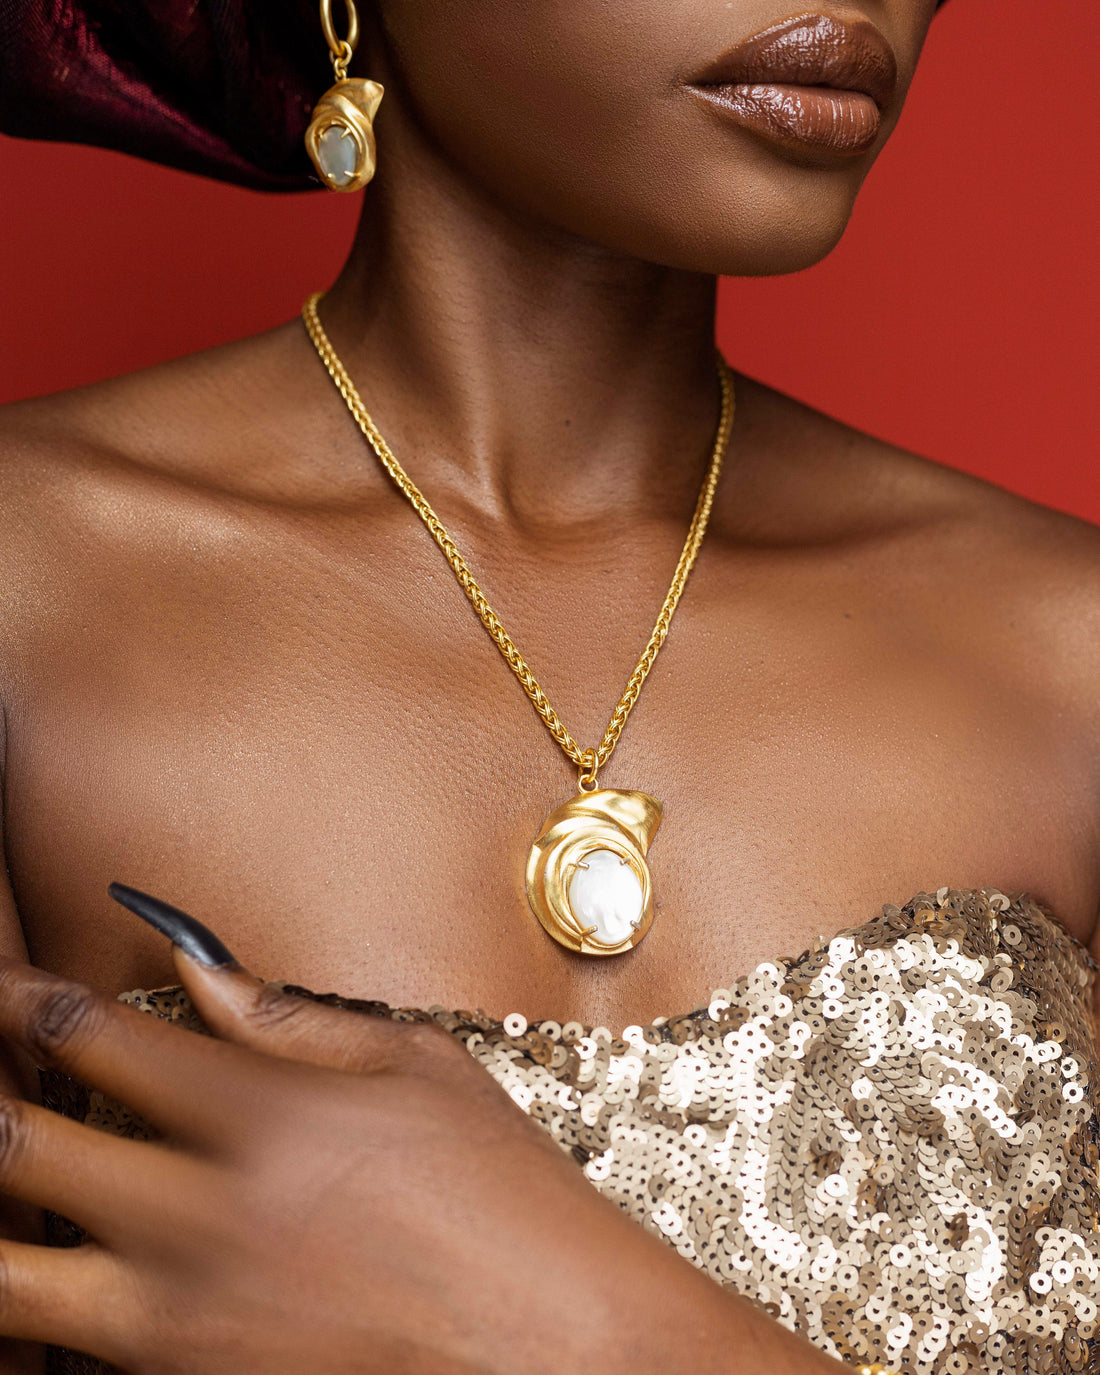 The Asoebibella Edit: Eye-Catching Jewelry to Master Wedding Guest Dressing